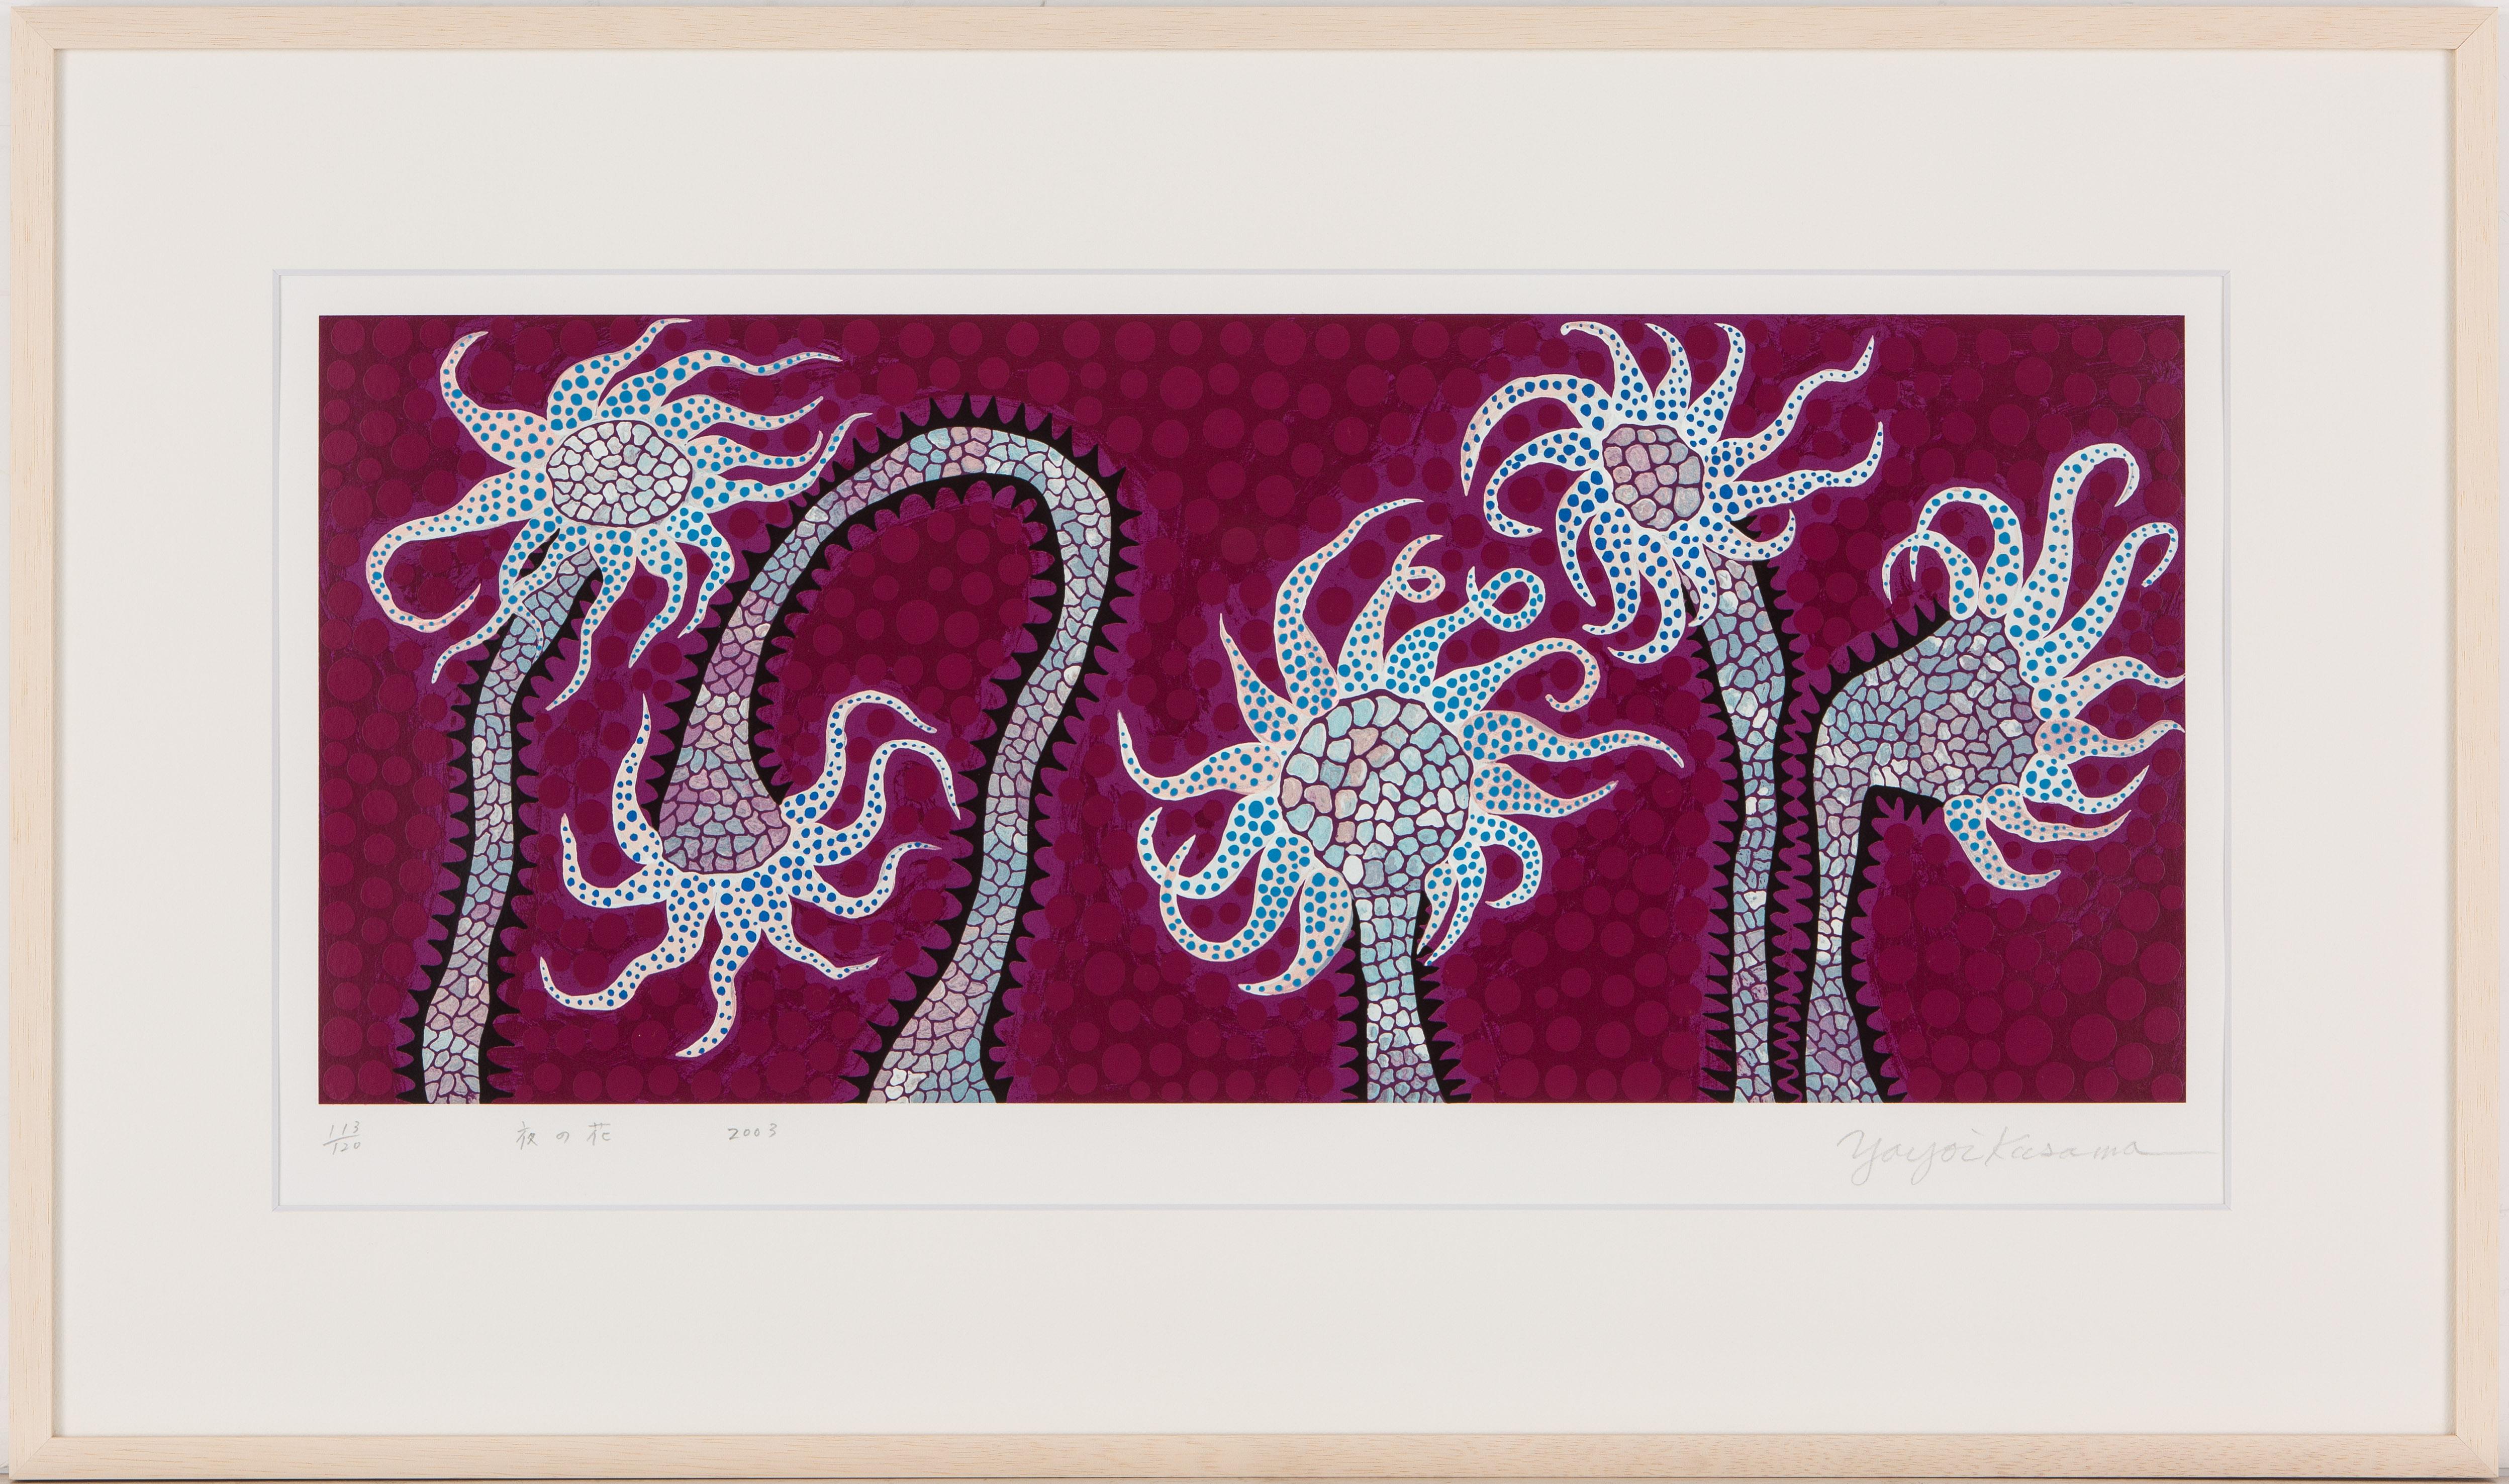 Yayoi Kusama
Nachtblumen (2003)
Siebdruck [23 Raster, 24 Farben, 24 Auflagen]
Bild 28 x 66,3 cm
Blatt 42,8 x 80 cm
gerahmt  51 x 89 x 5 cm
ed. 120, AP 12, PP5
Papier Kakita-shi
Drucker Okabe Tozuko

Provenienz:
Mainichi-Auktion Tokio